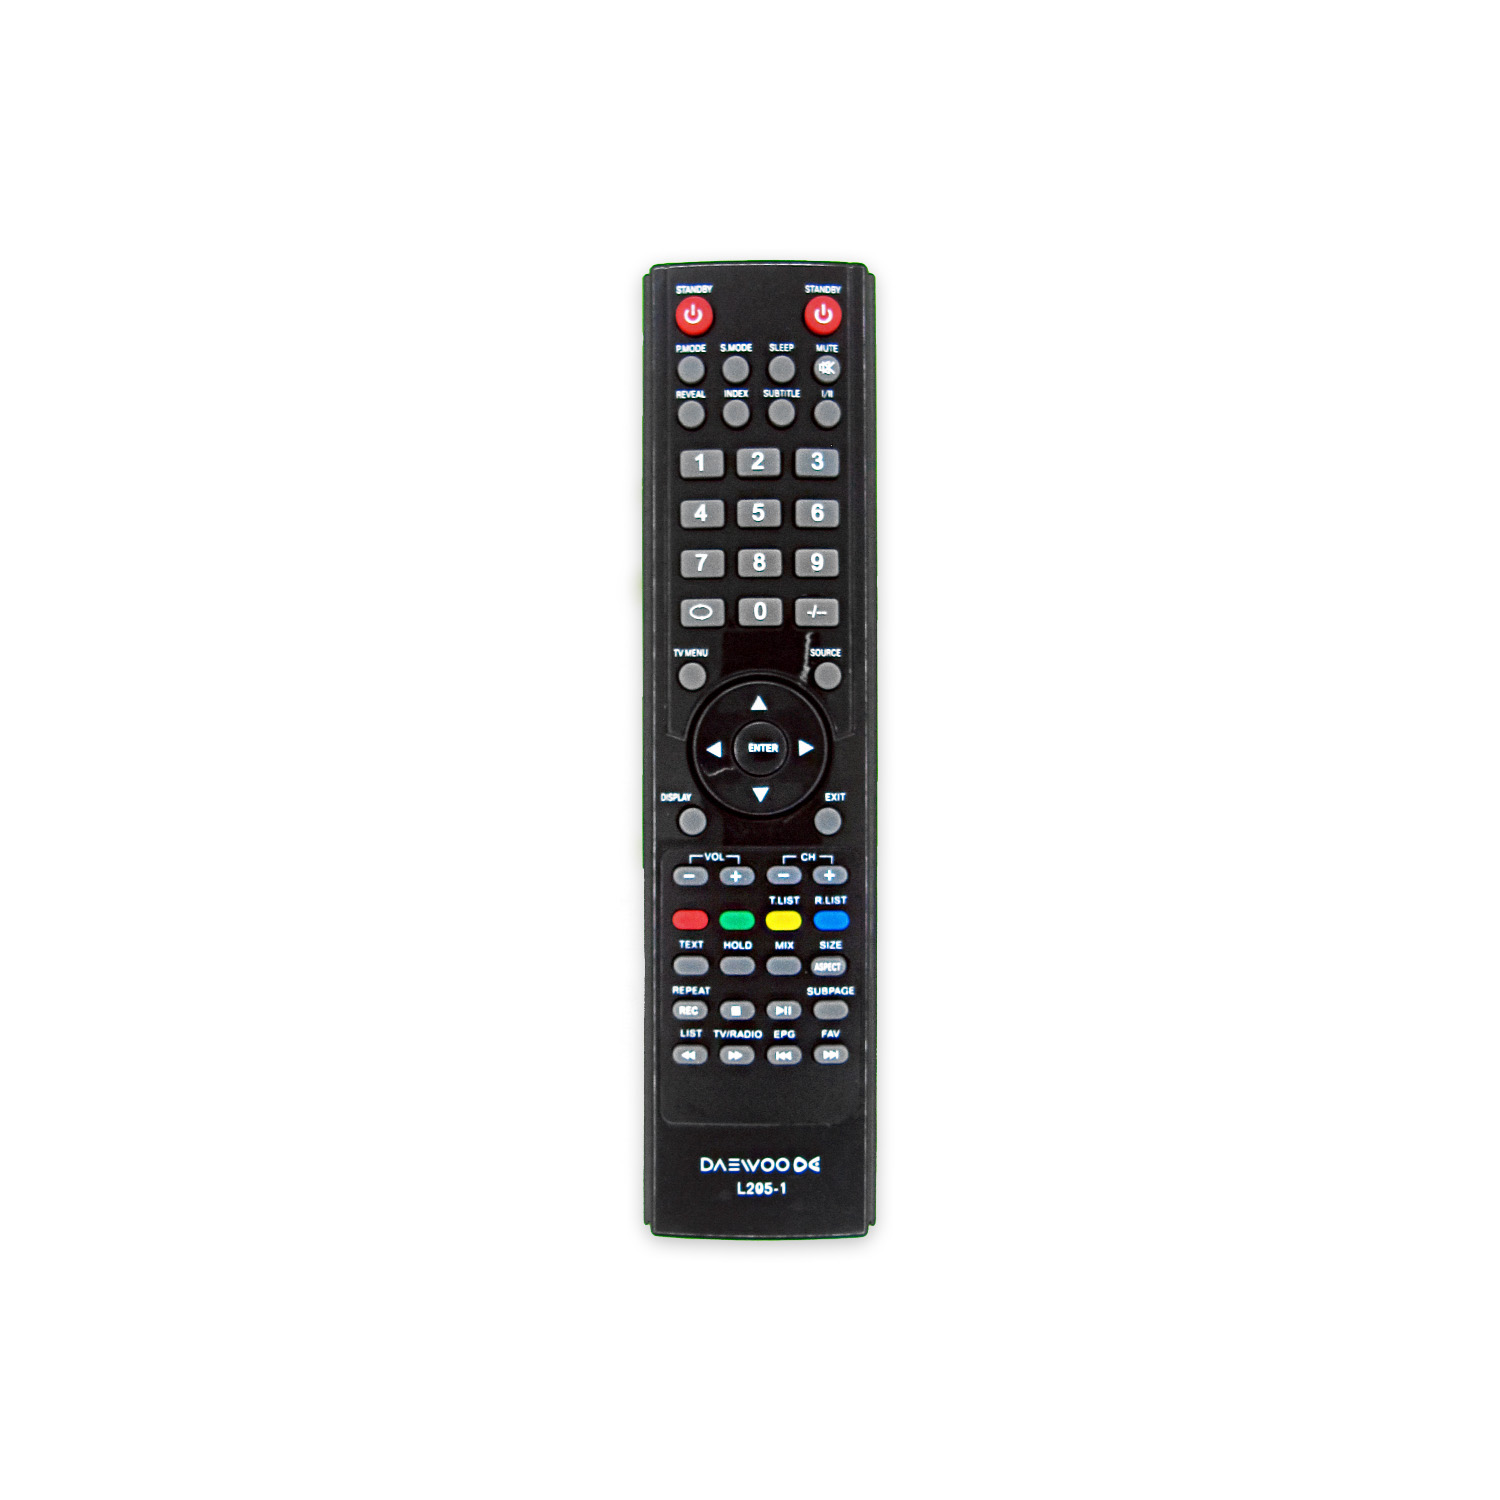  کنترل تلویزیون ال ای دی دوو DAEWOODE مدل L205 1